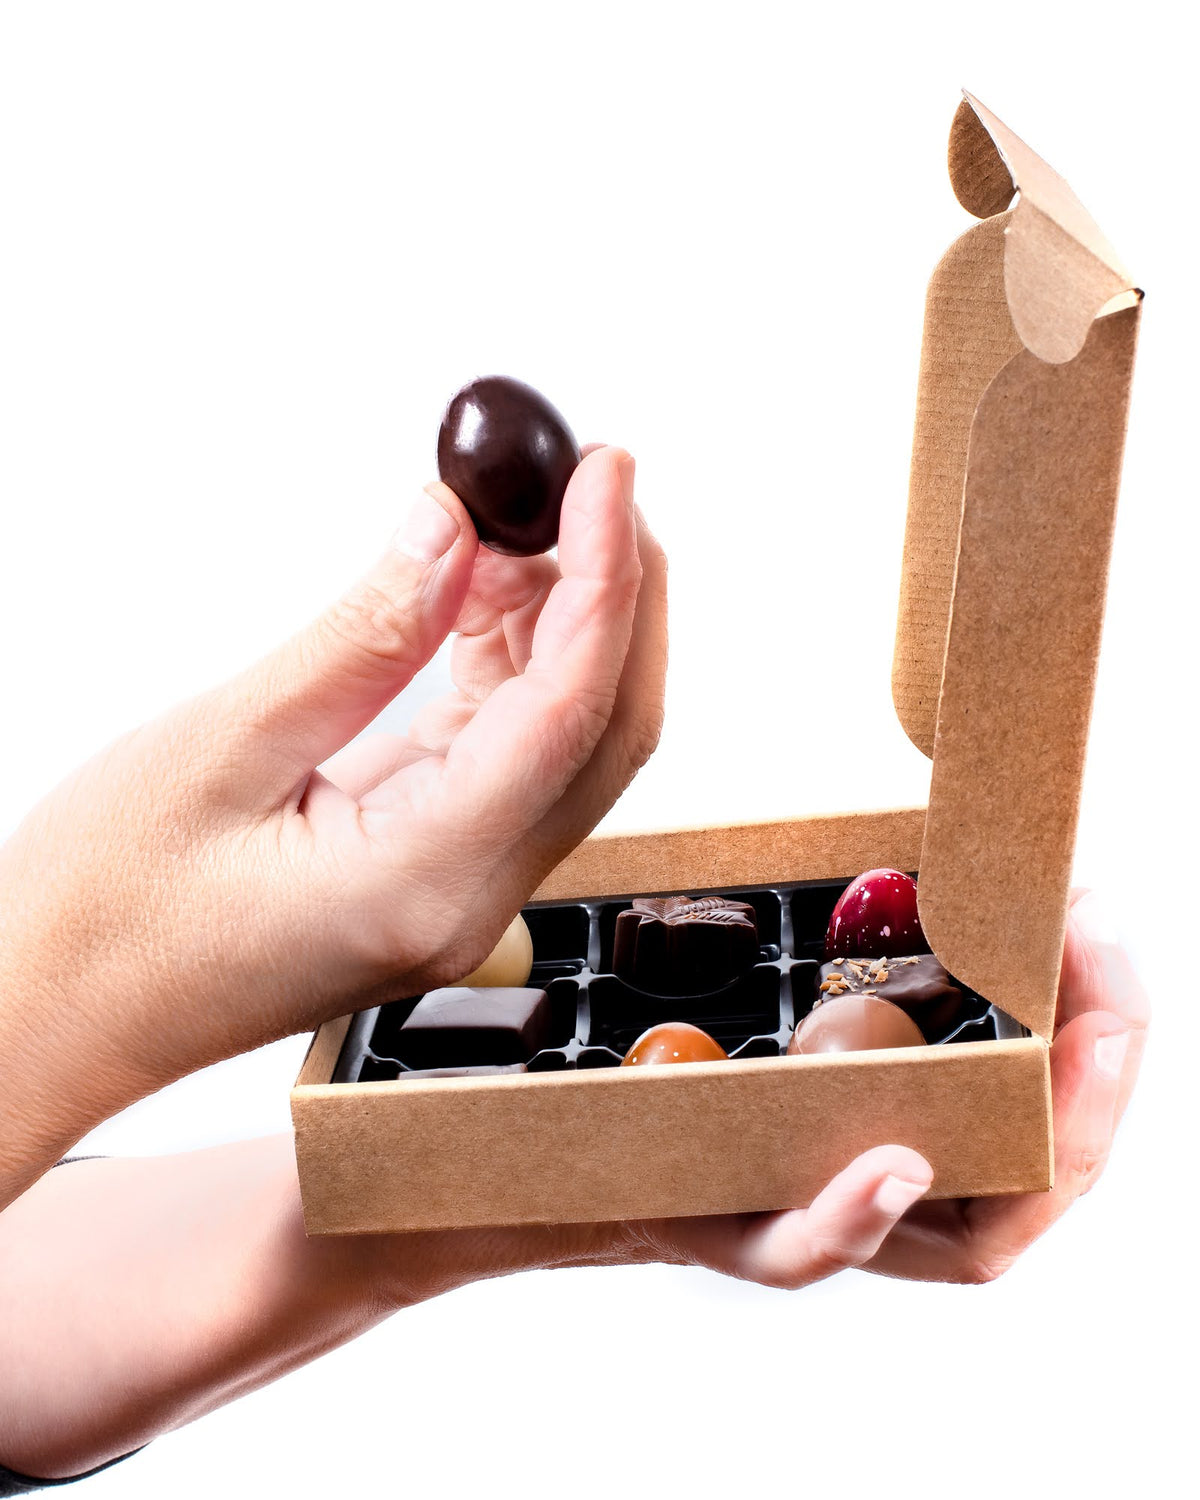 27 fine chocolates assortment box - Easter